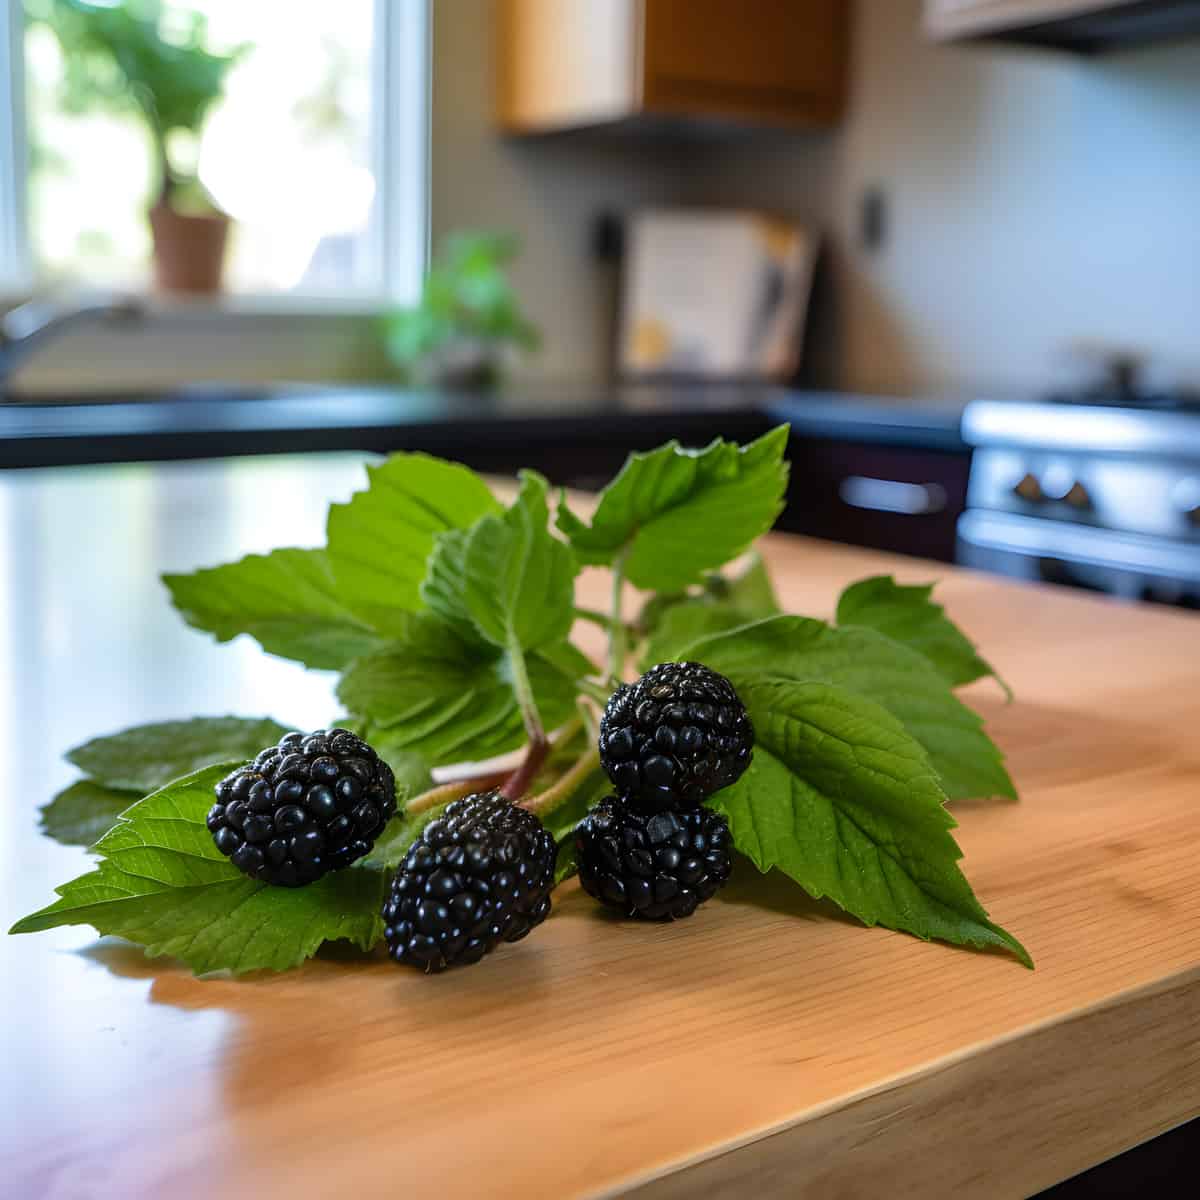 Cutleaf Evergreen Blackberries on a kitchen counter